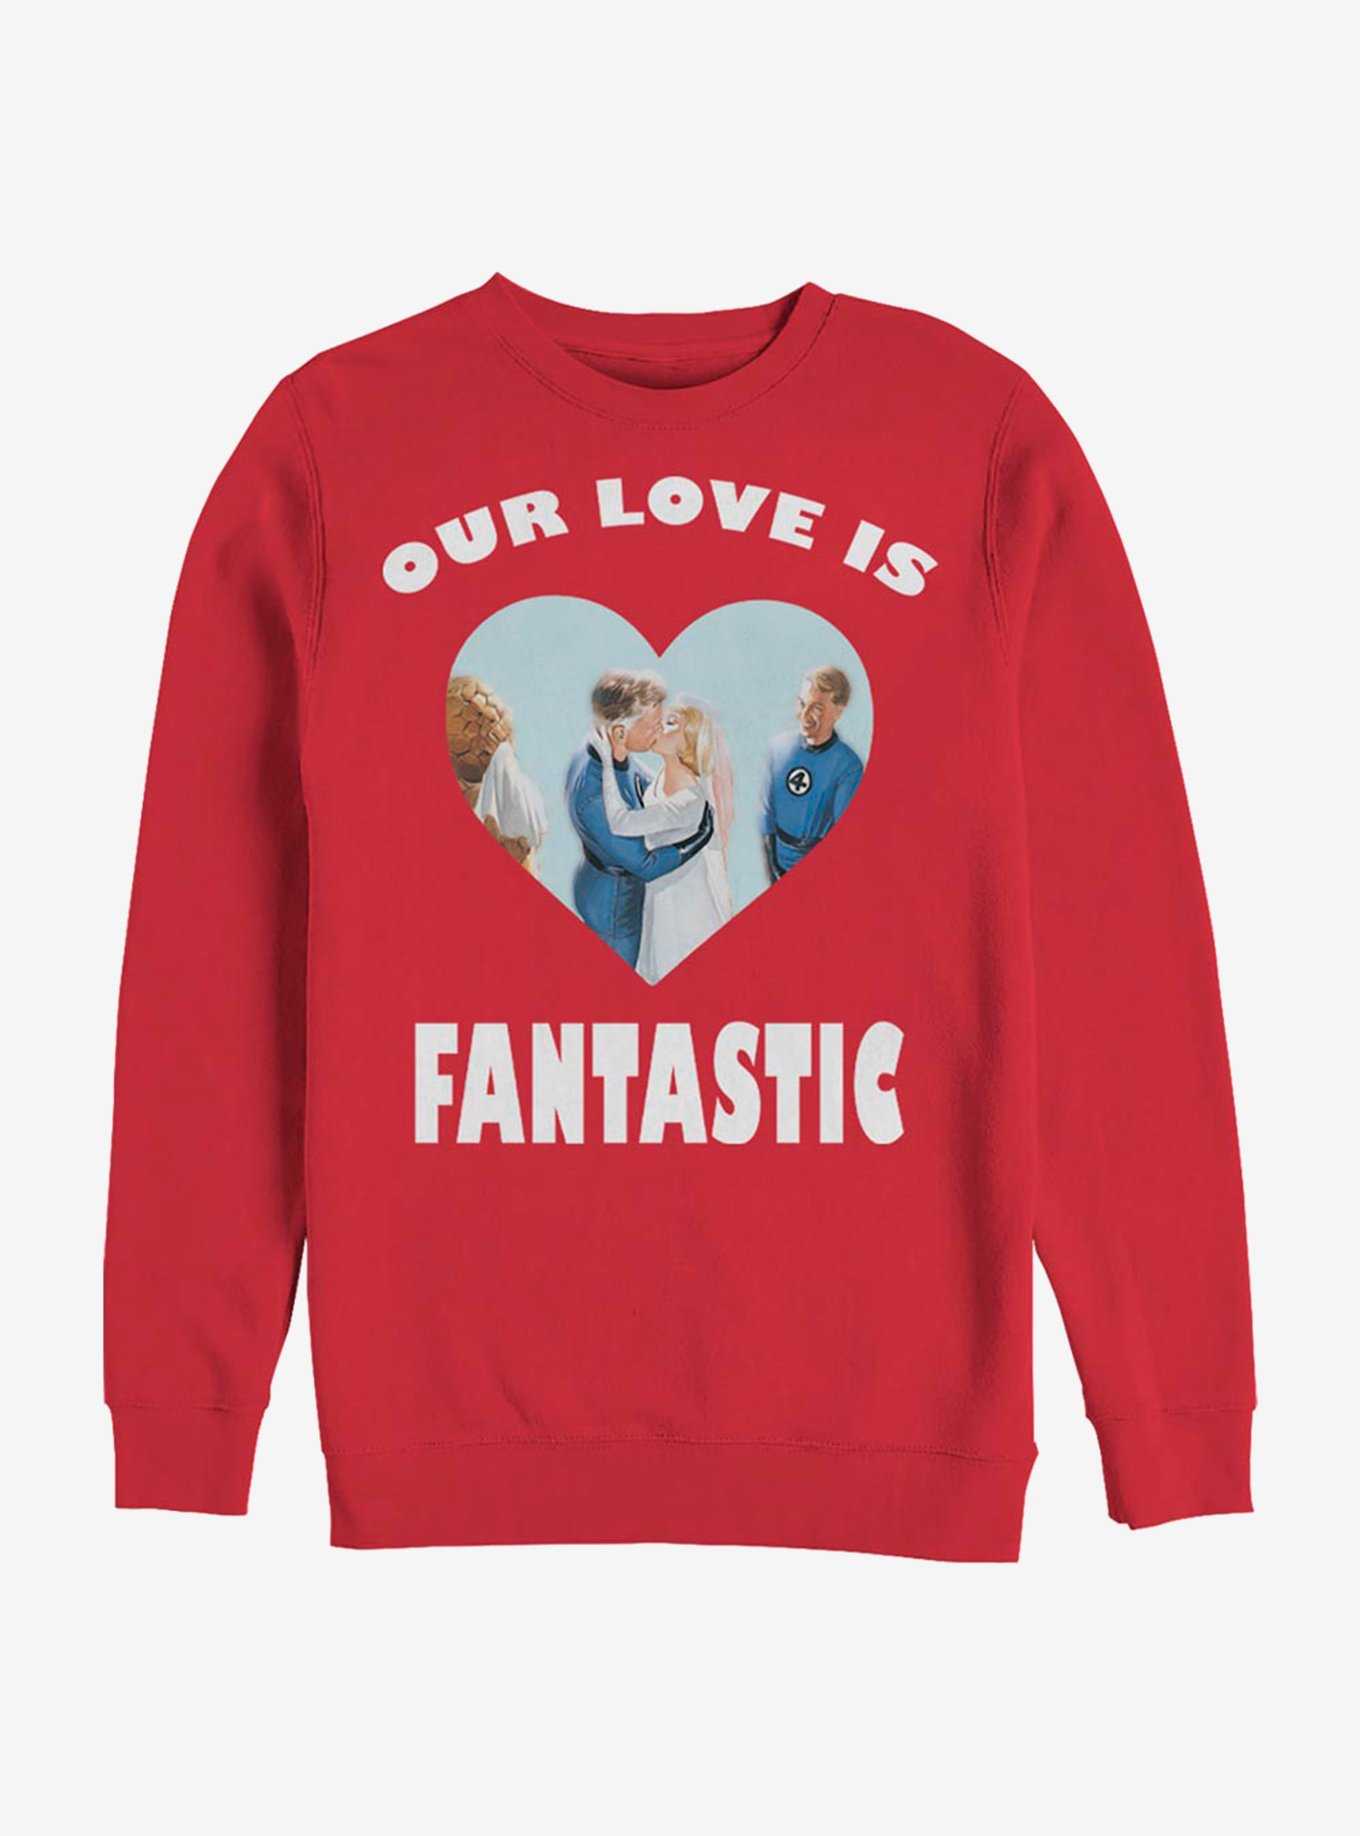 Marvel Fantastic Four Fantastic Love Crew Sweatshirt, , hi-res